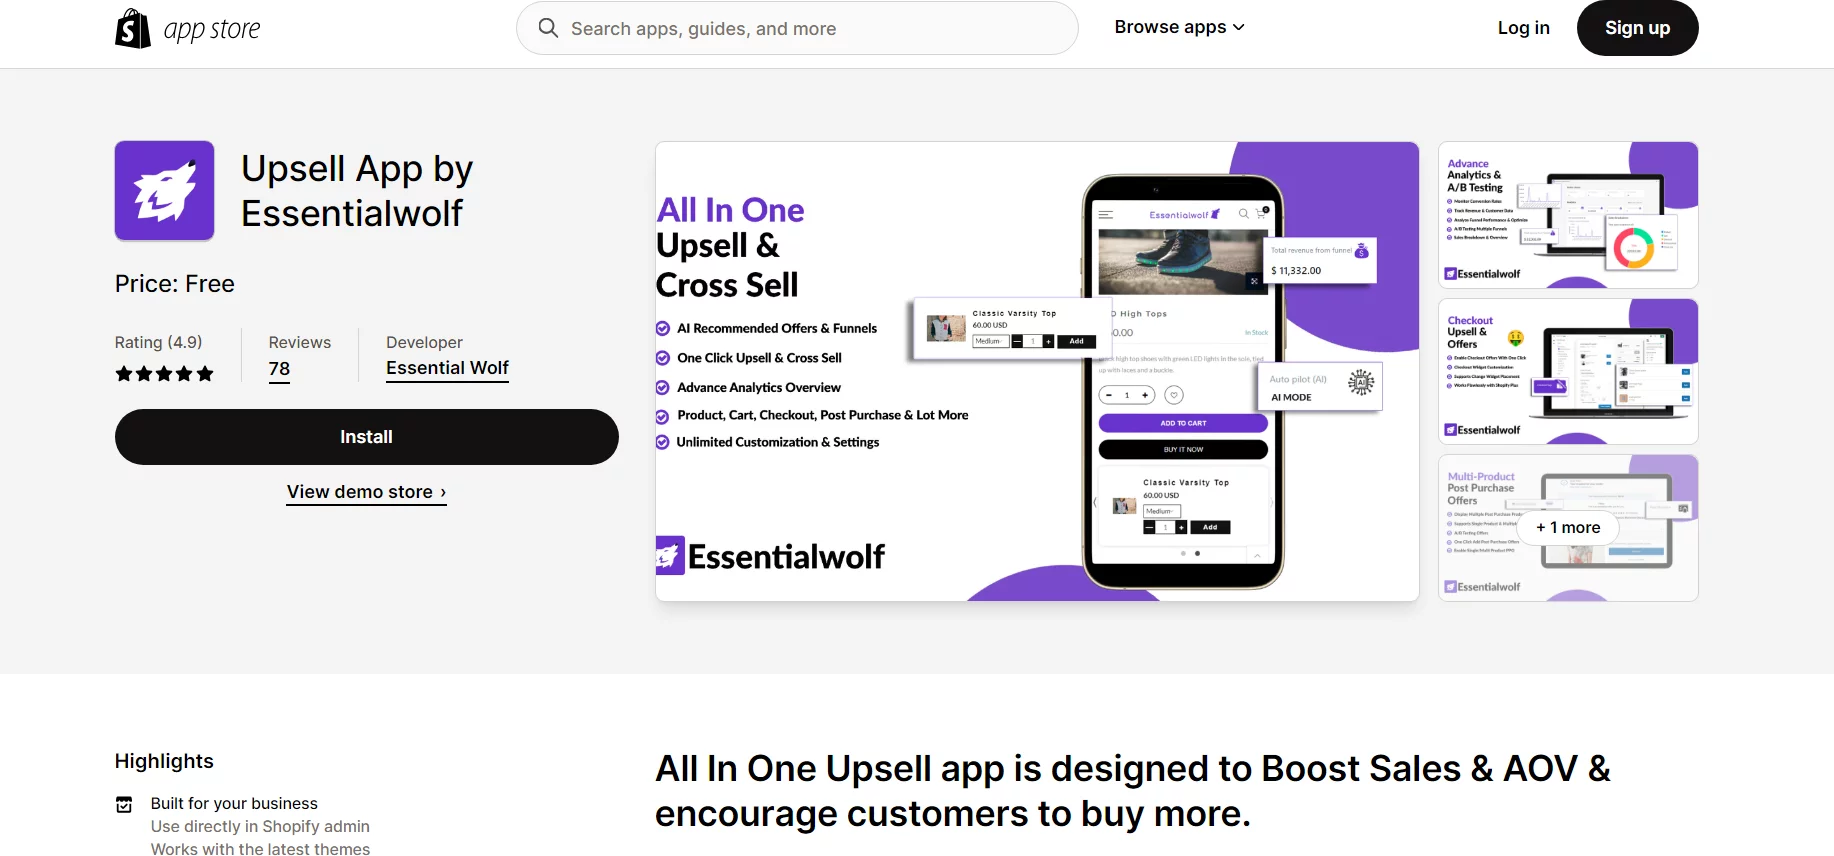 Upsell App by Essentialwolf